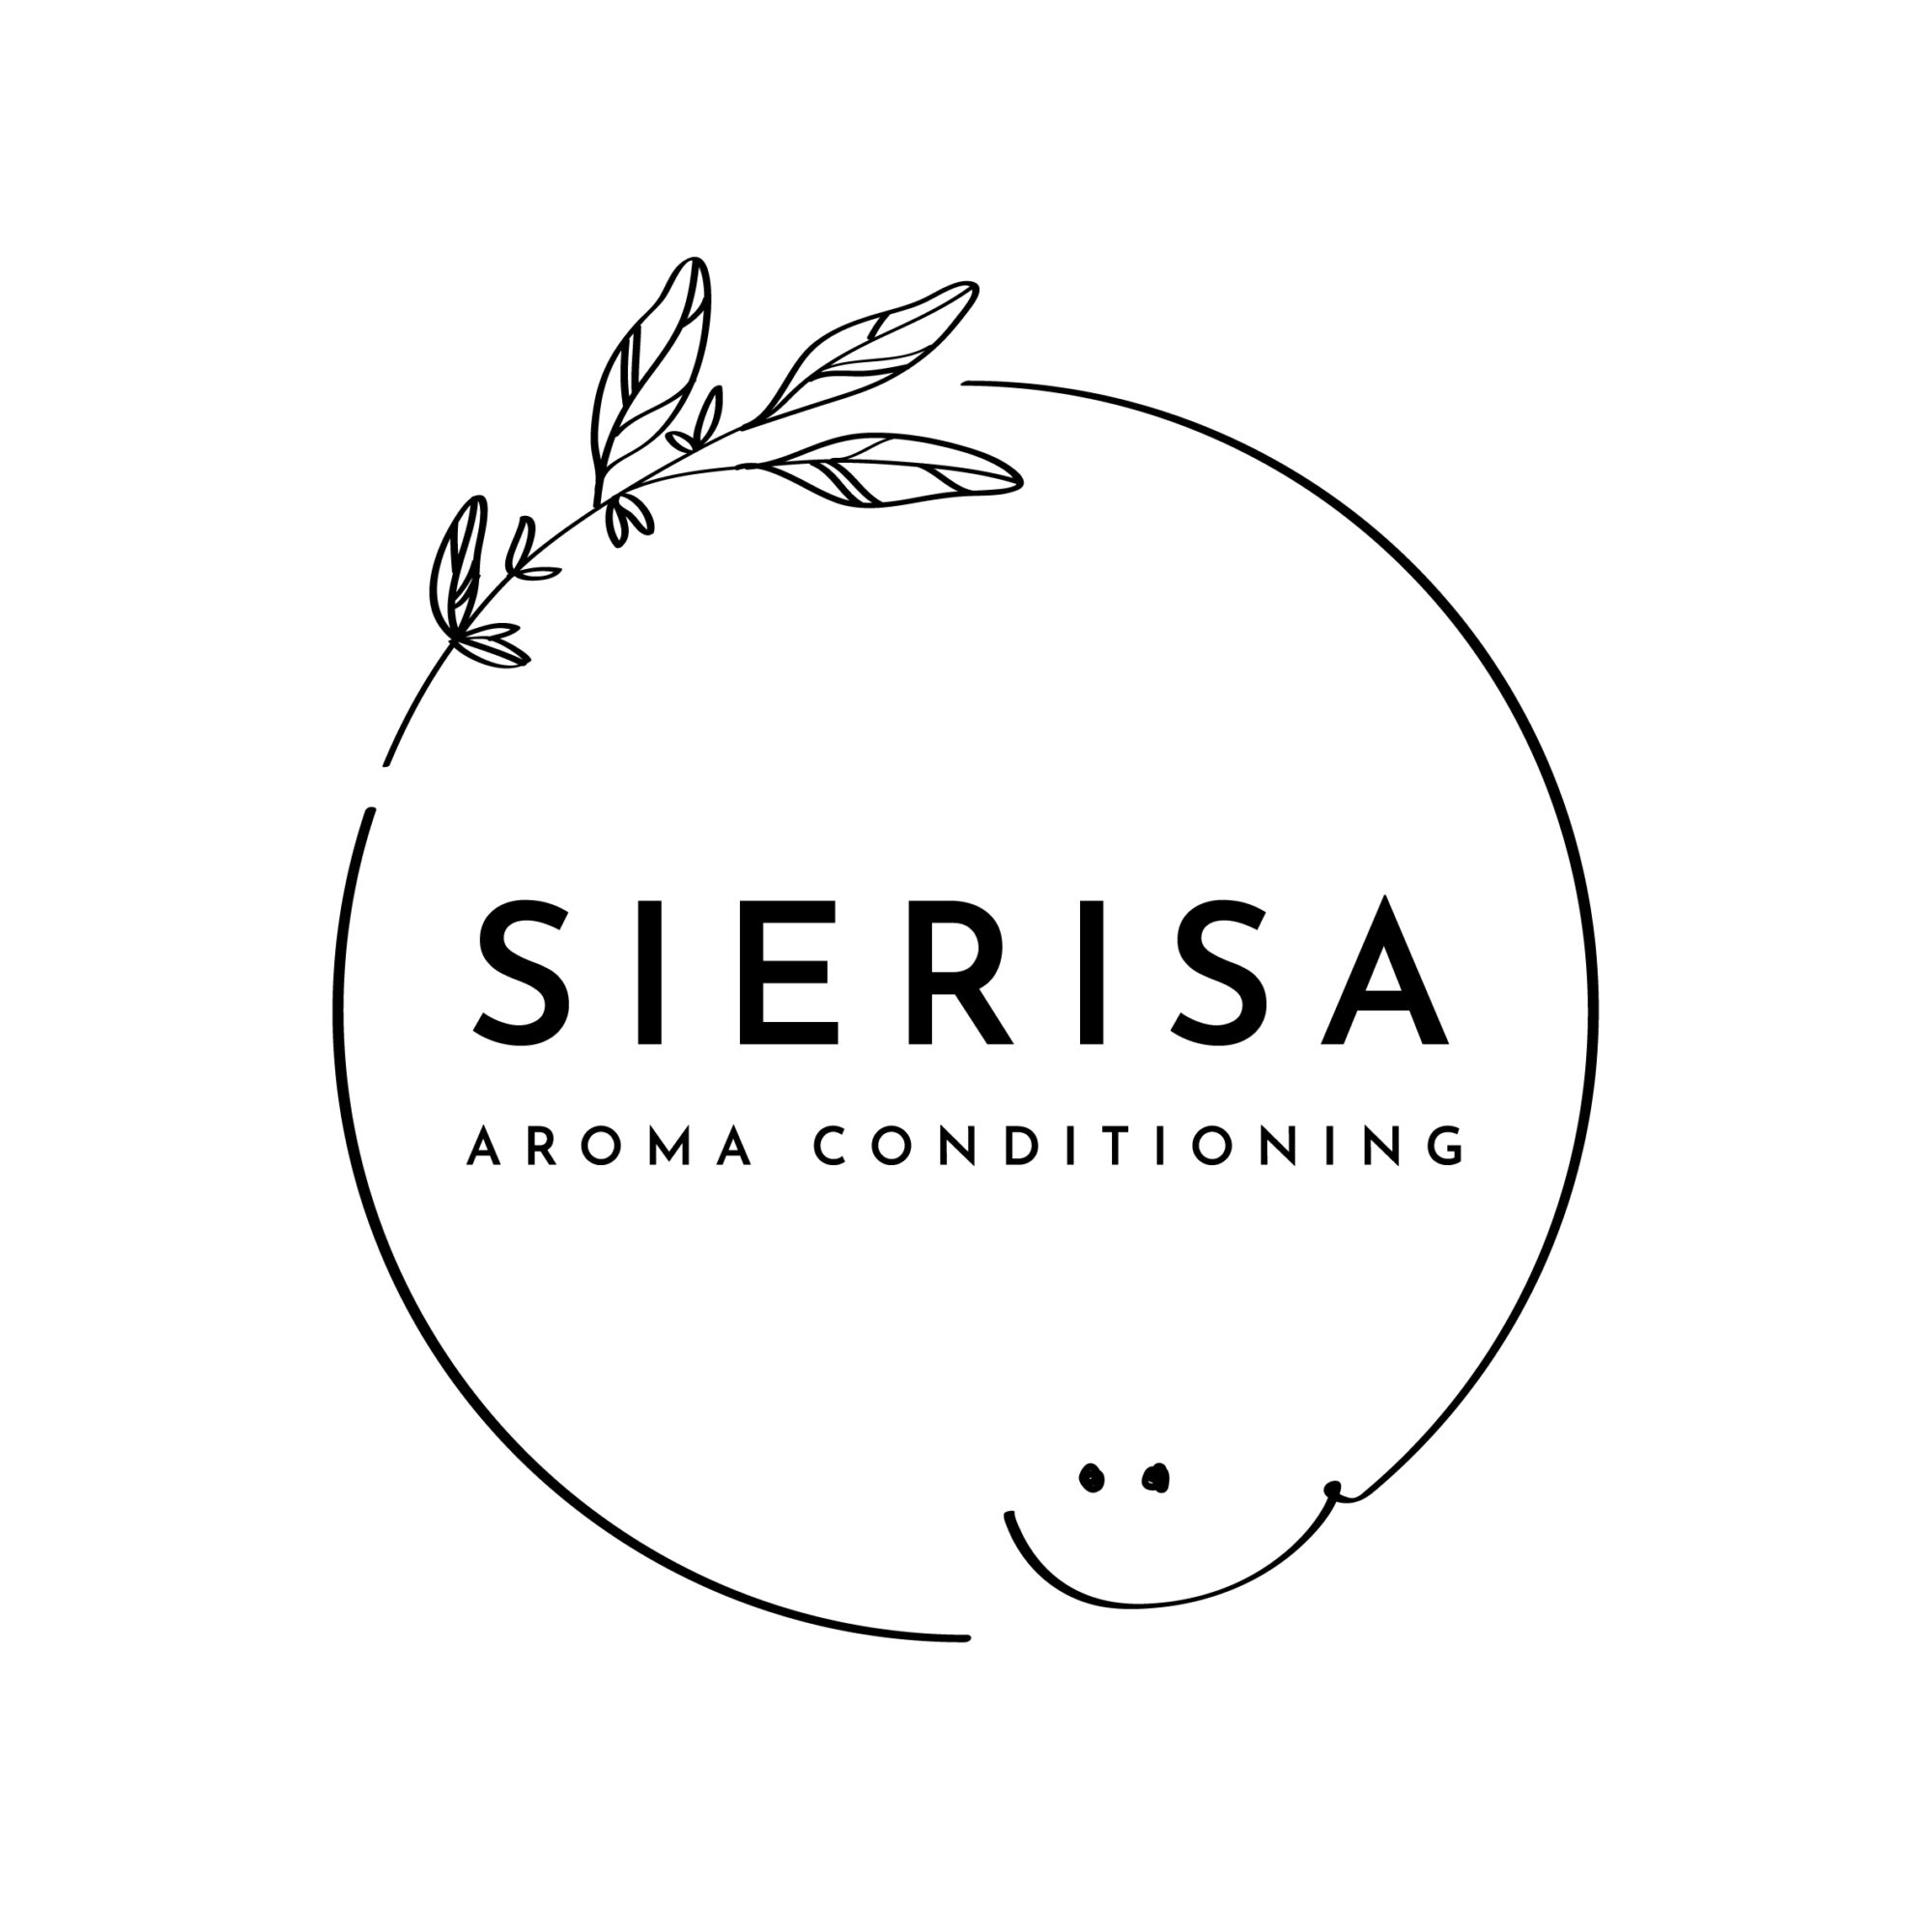 SIERISA Aroma Conditioning